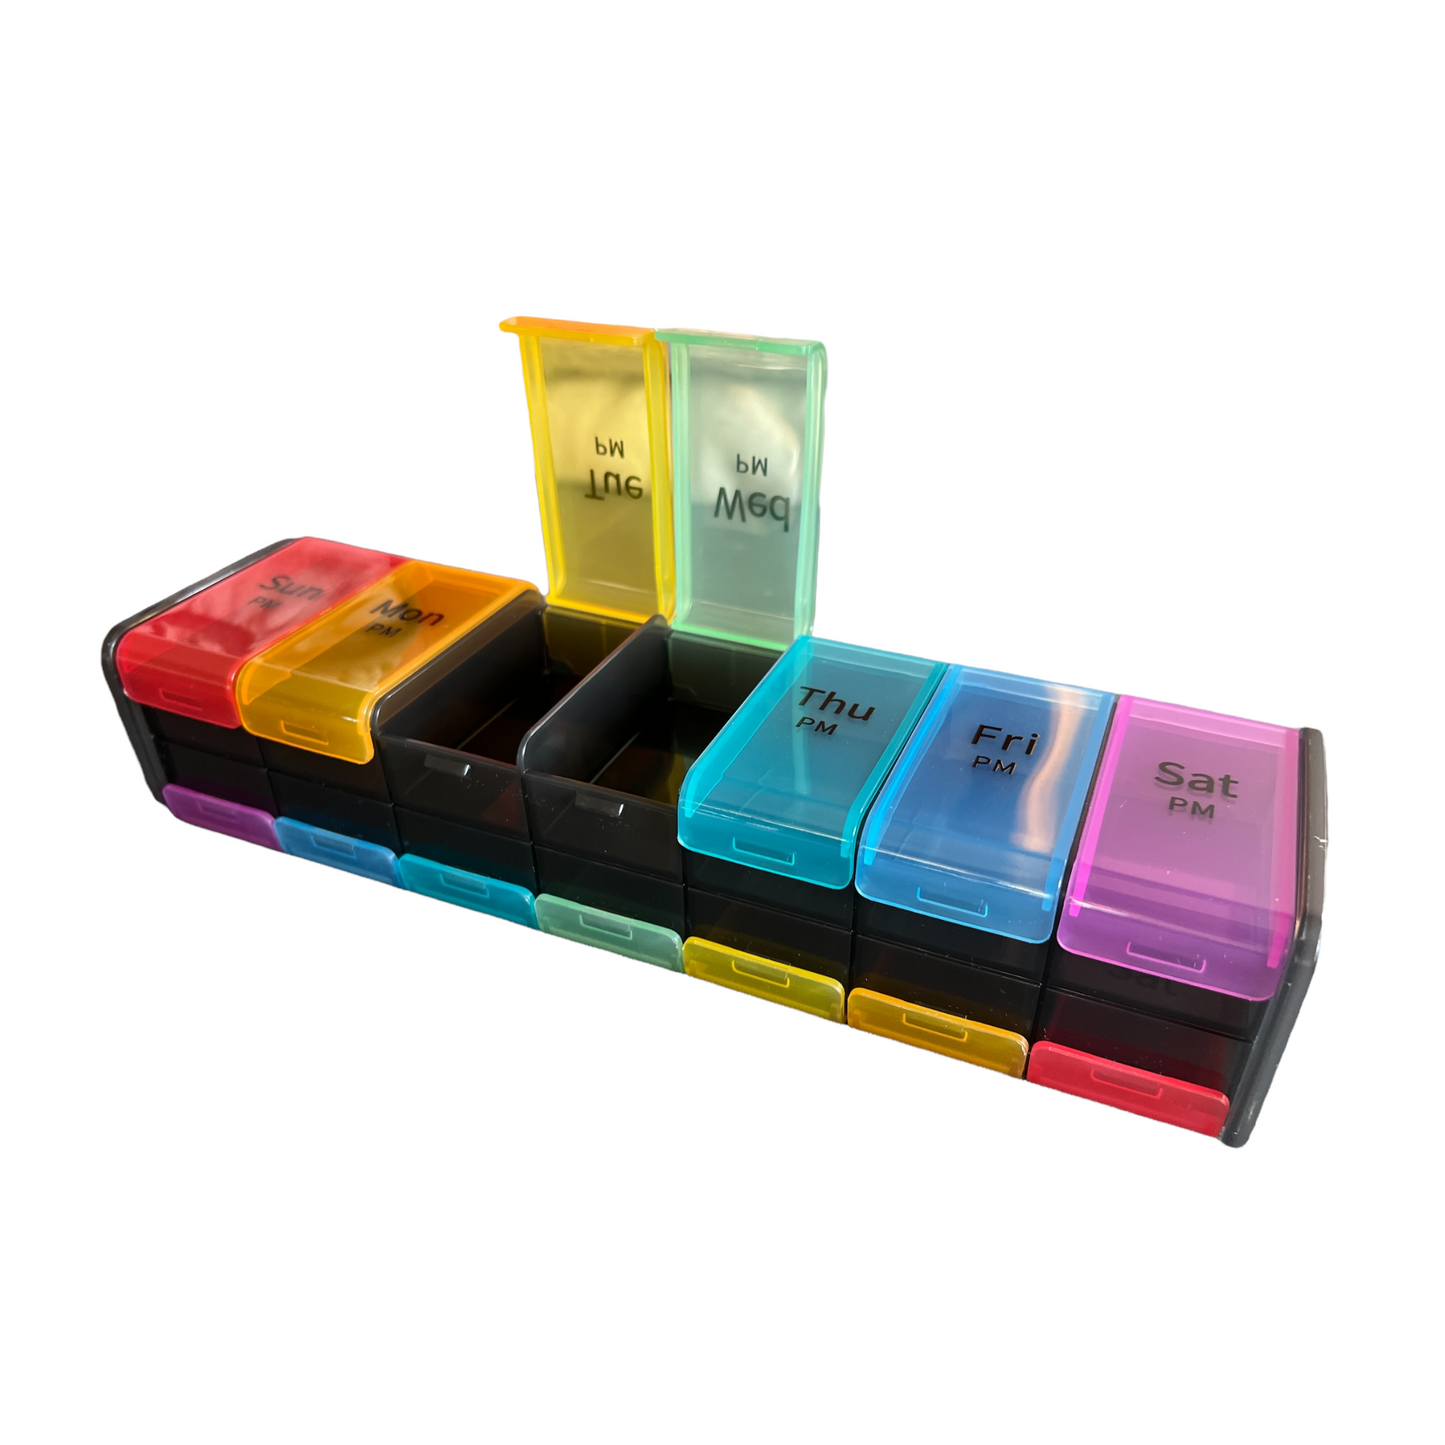 7 Day Pill Box — 2x Blisters Daily - Jumbo Box Managing Medications SPIRIT SPARKPLUGS Jumbo Box  